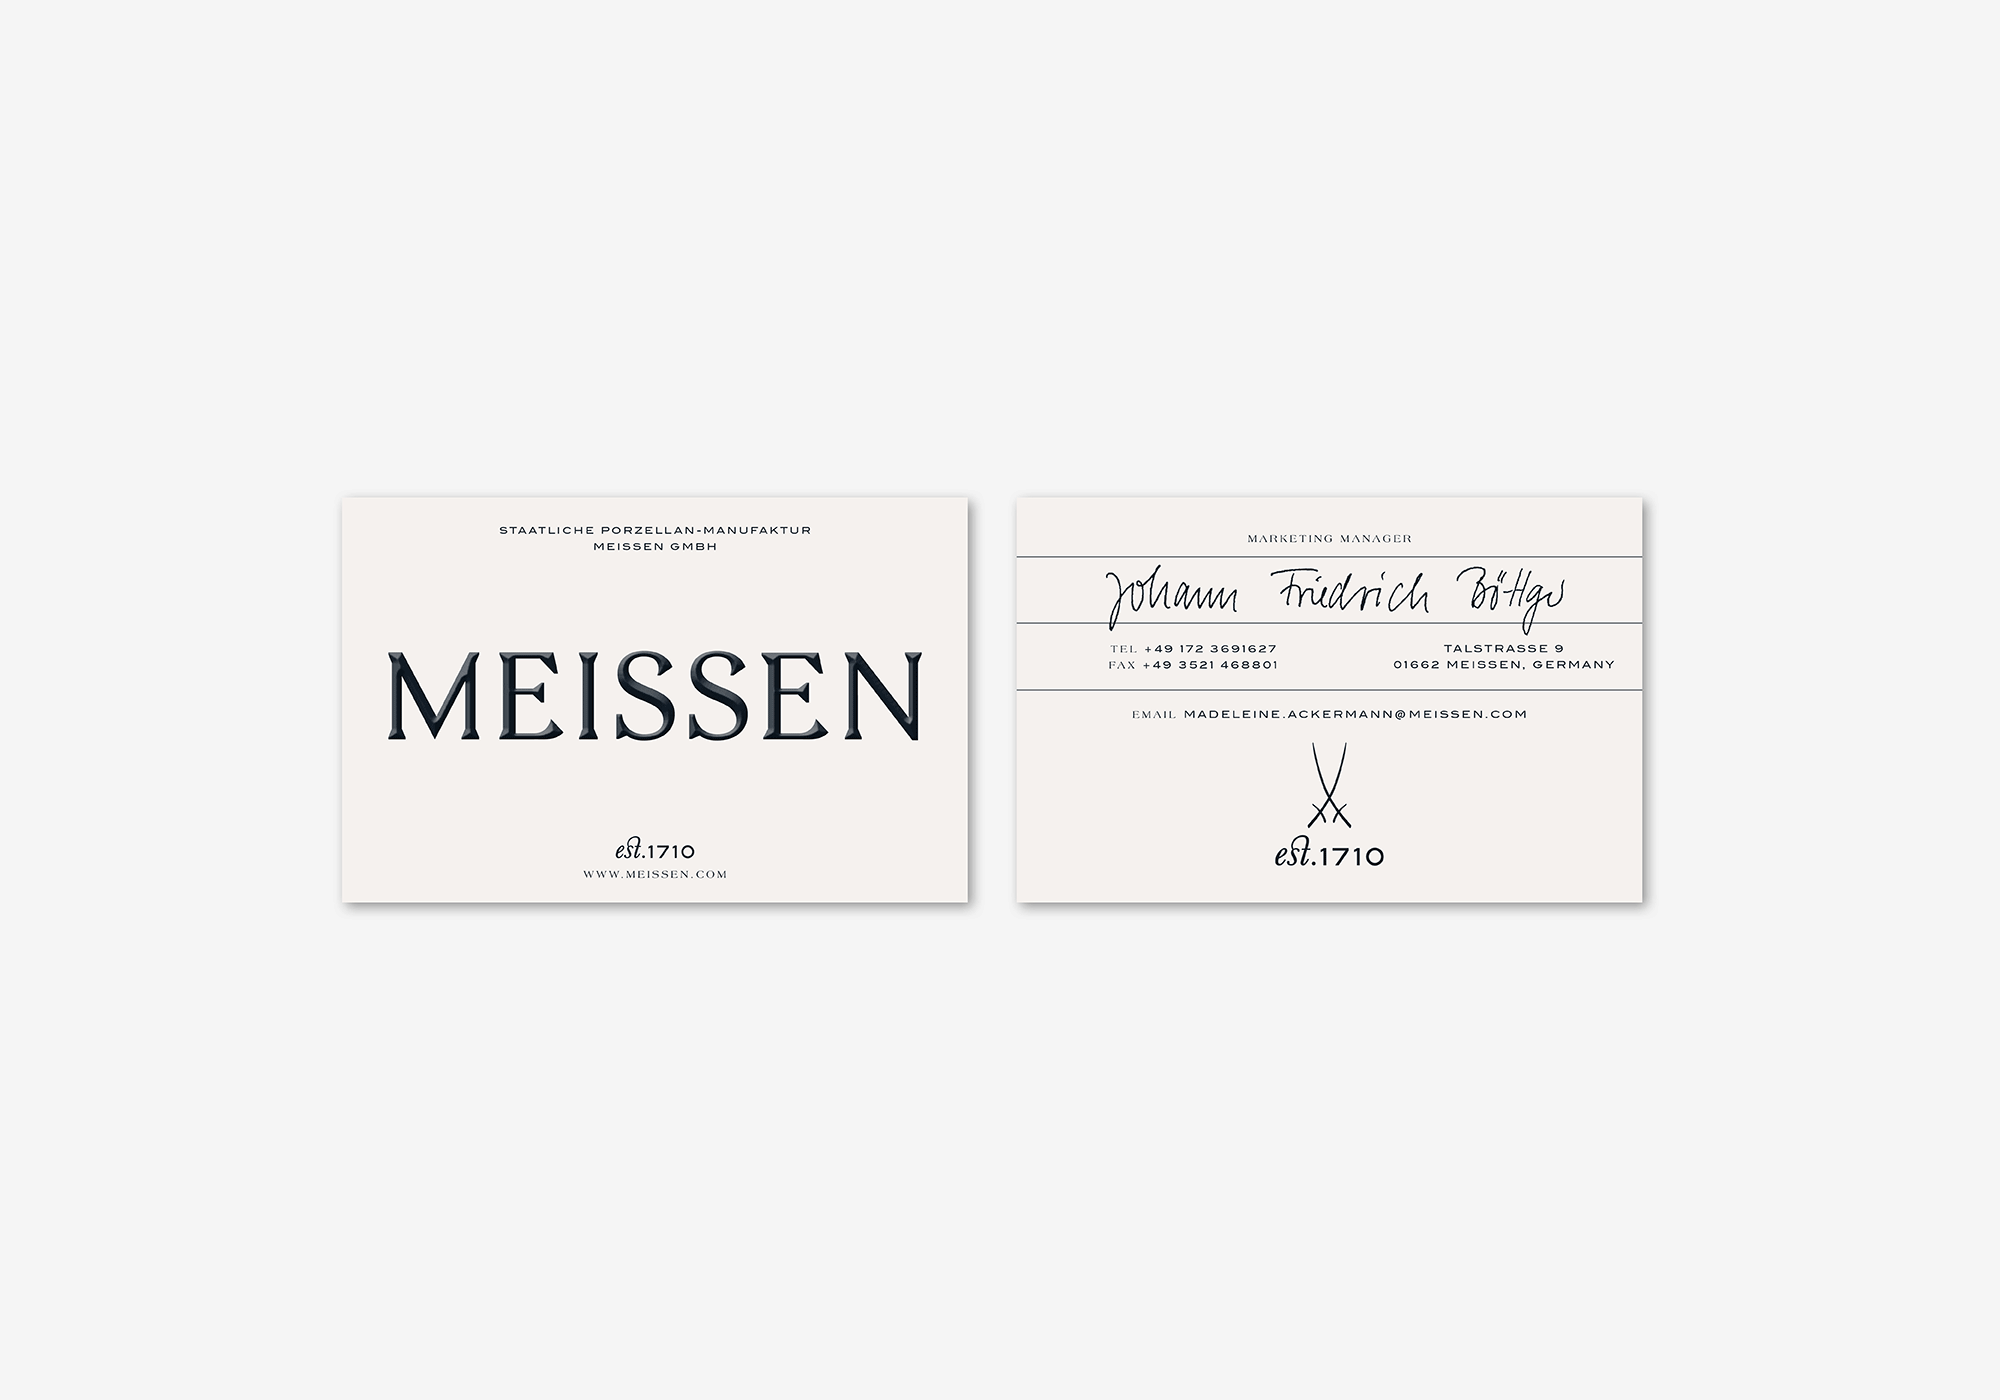 Meissen Logo - The Gaabs, Berlin design agency and creative consultancy